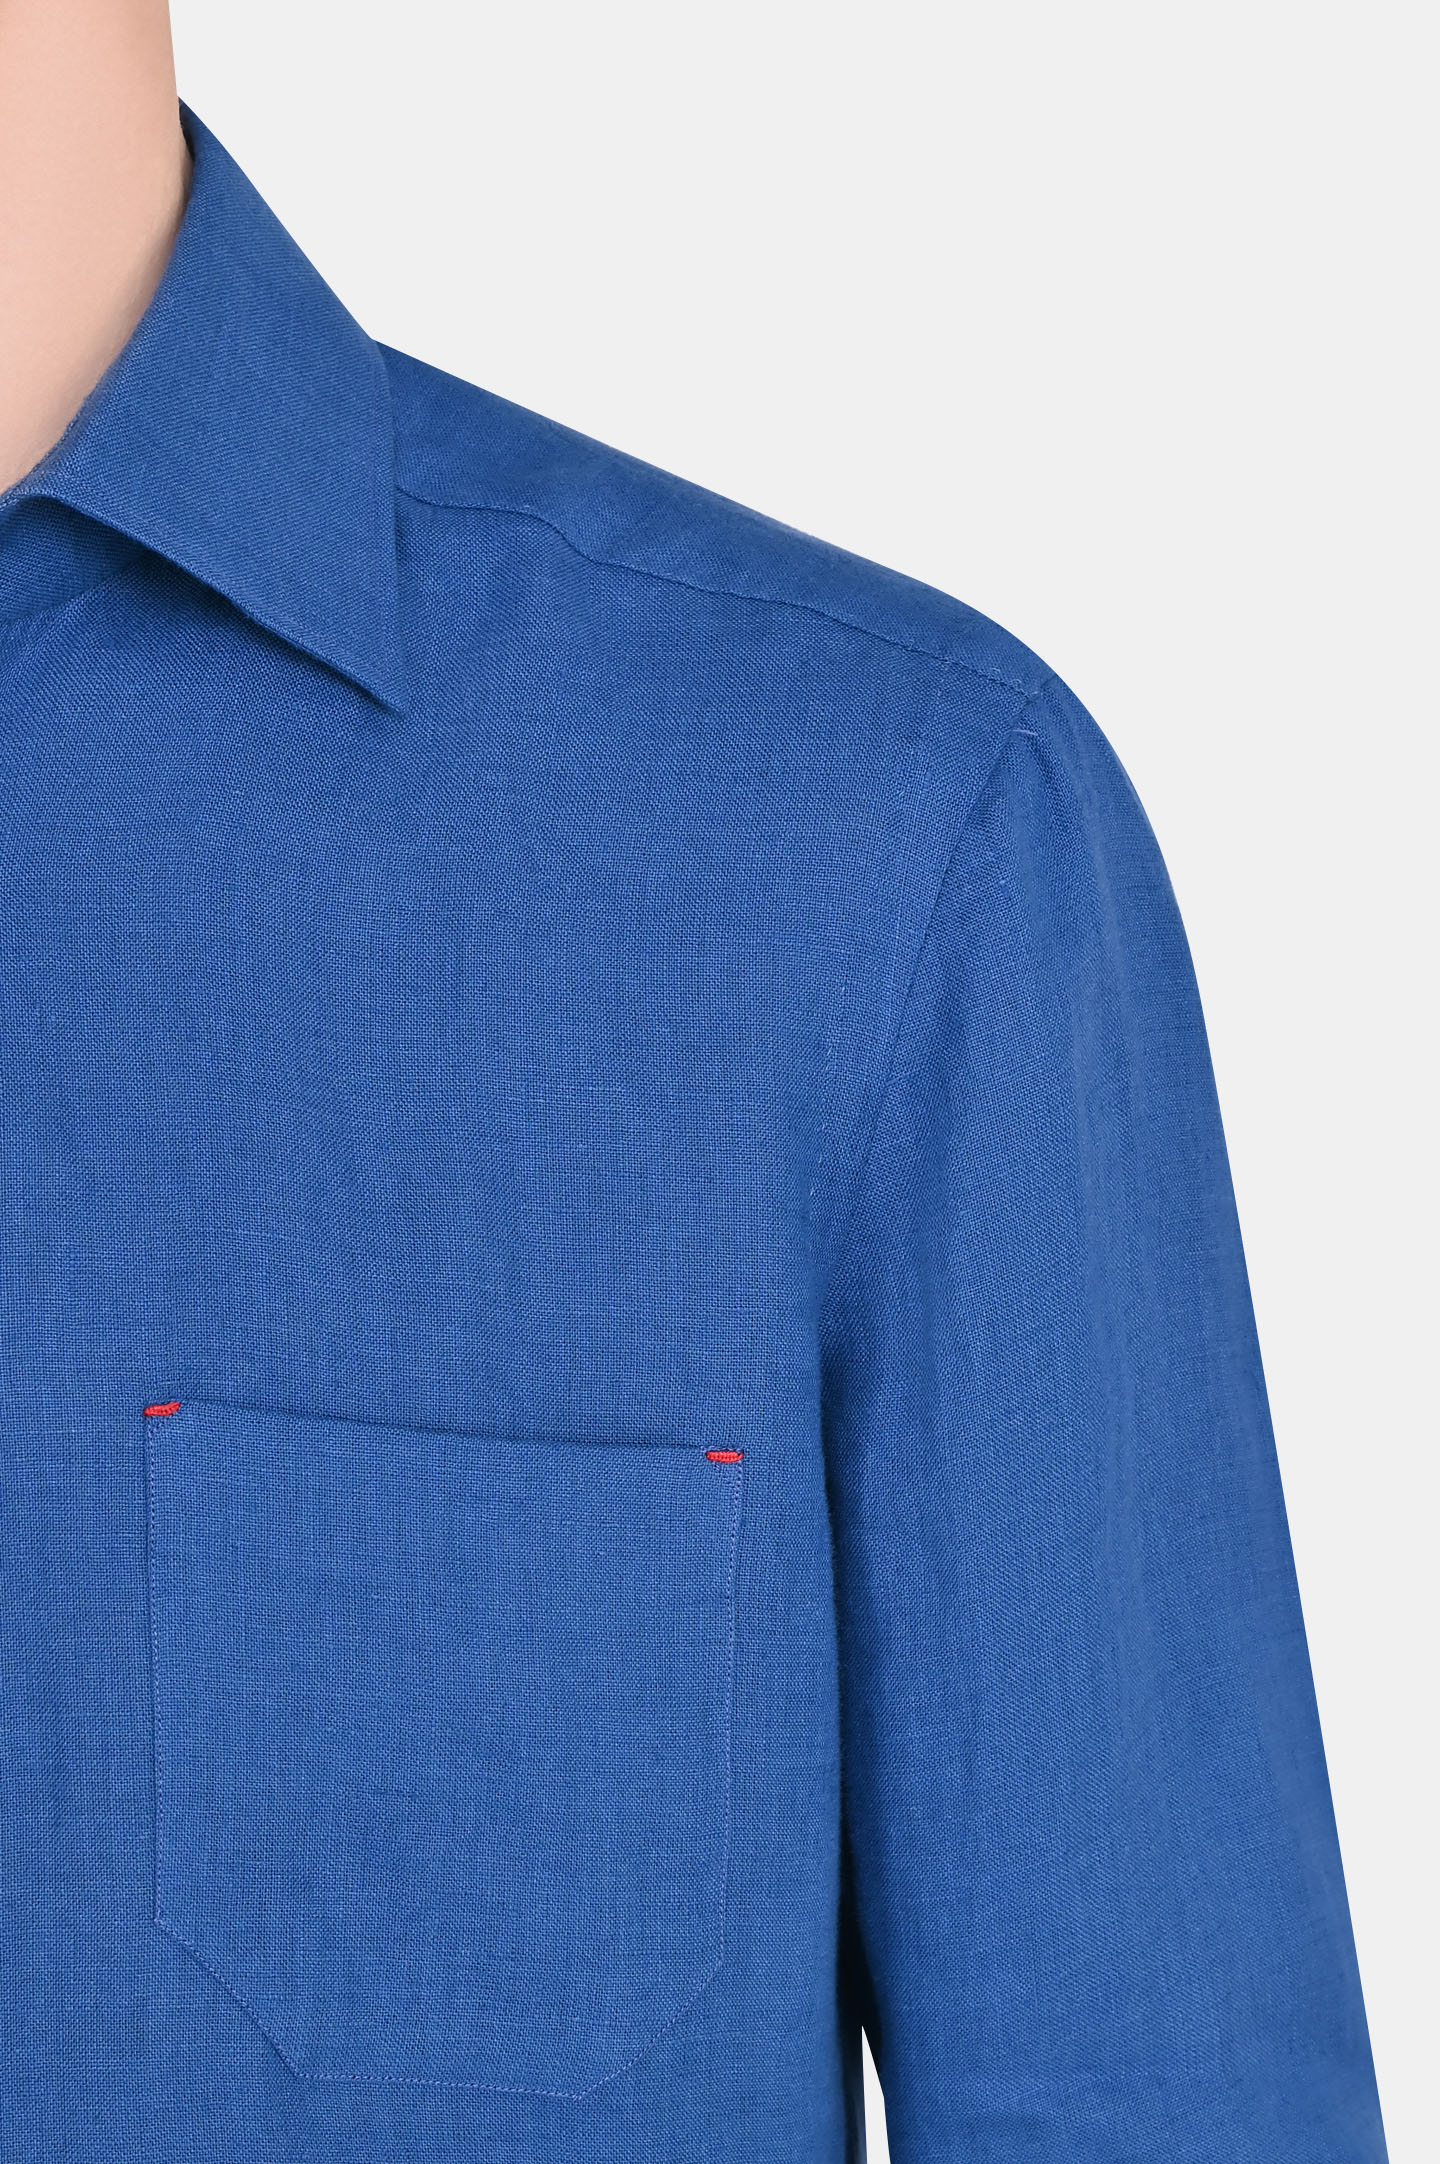 Рубашка KITON UMCNERPH084000, цвет: Синий, Мужской